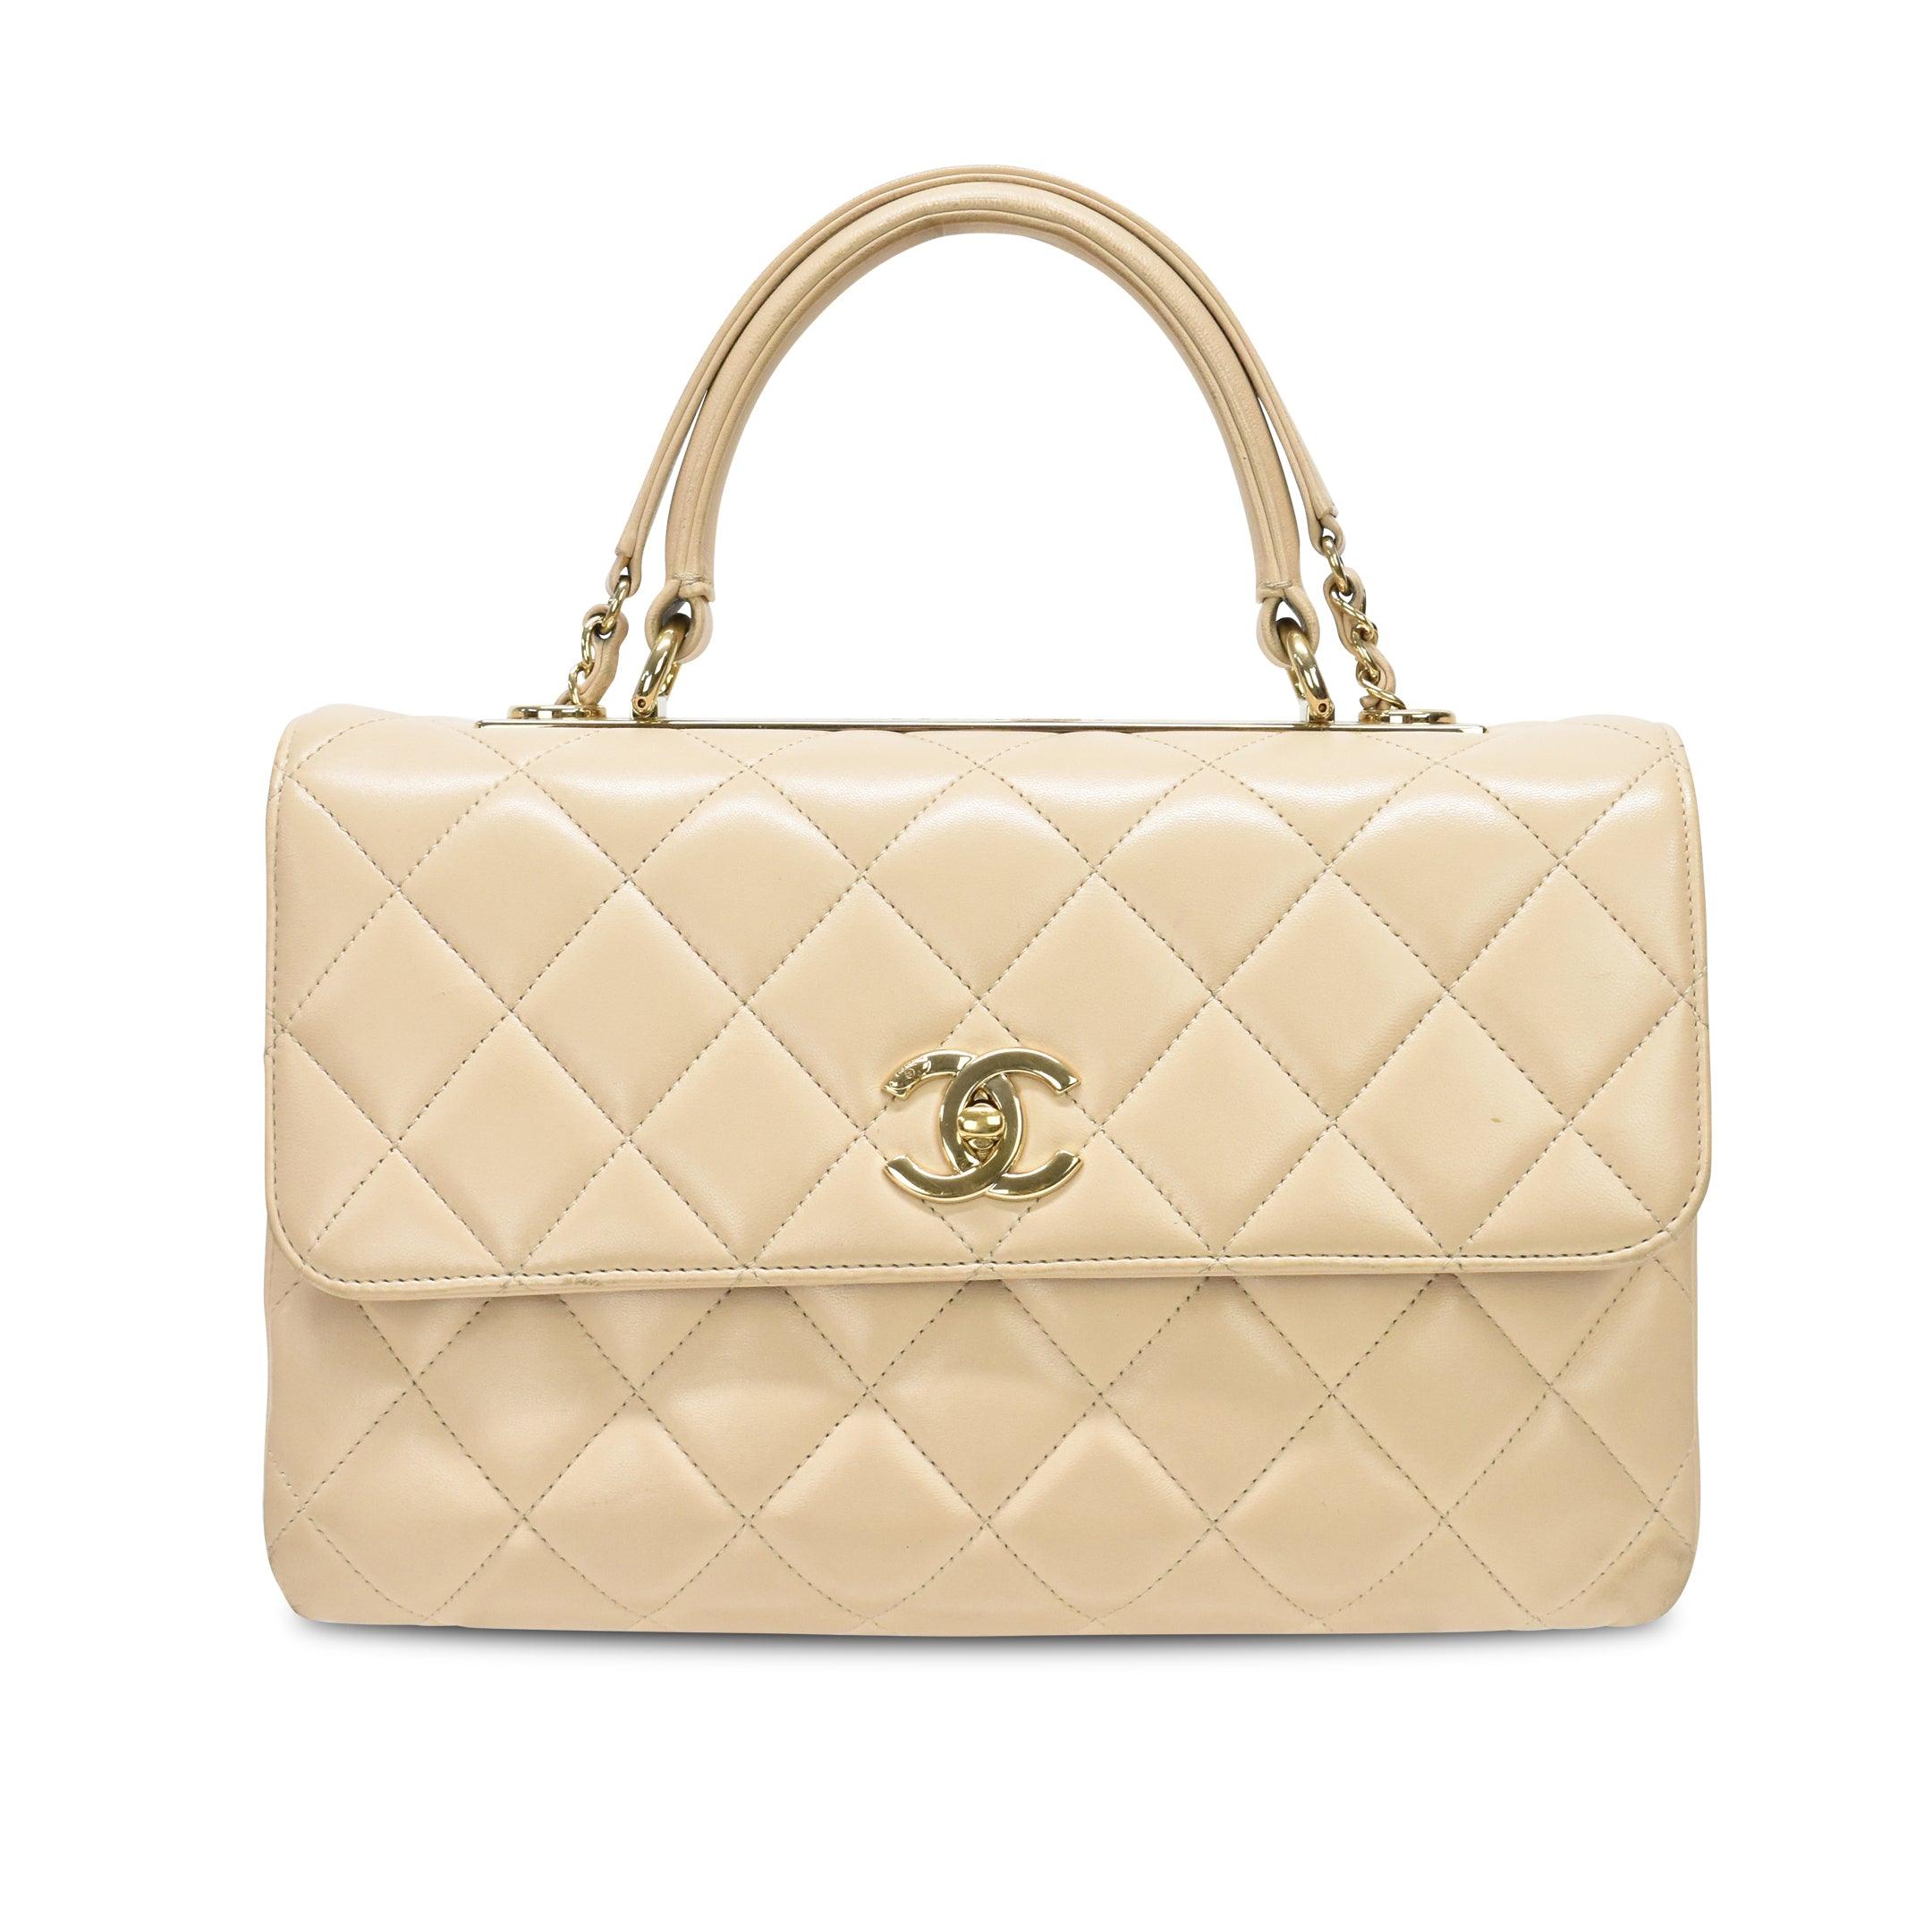 Chanel 'Trendy CC Medium' Handbag - Fashionably Yours